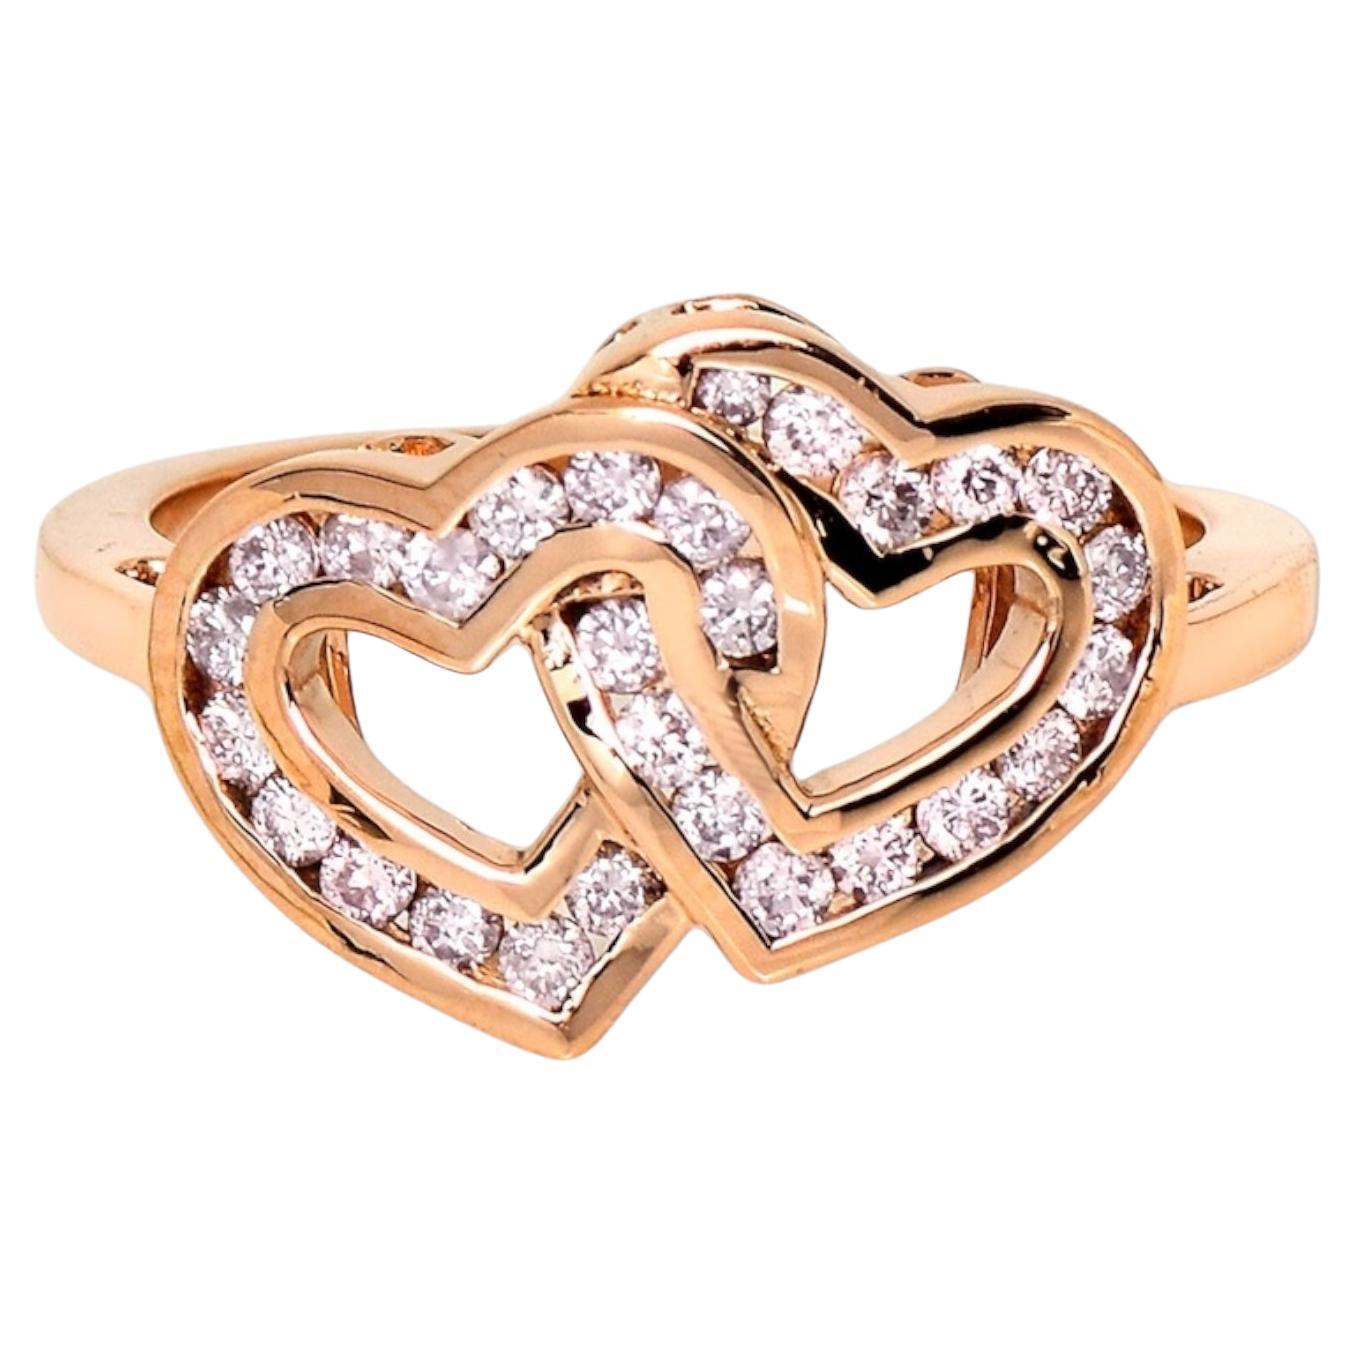 IGI 14K 0.40 ct Natural Pink Diamonds Cross Heart Design Antique Art Deco Ring